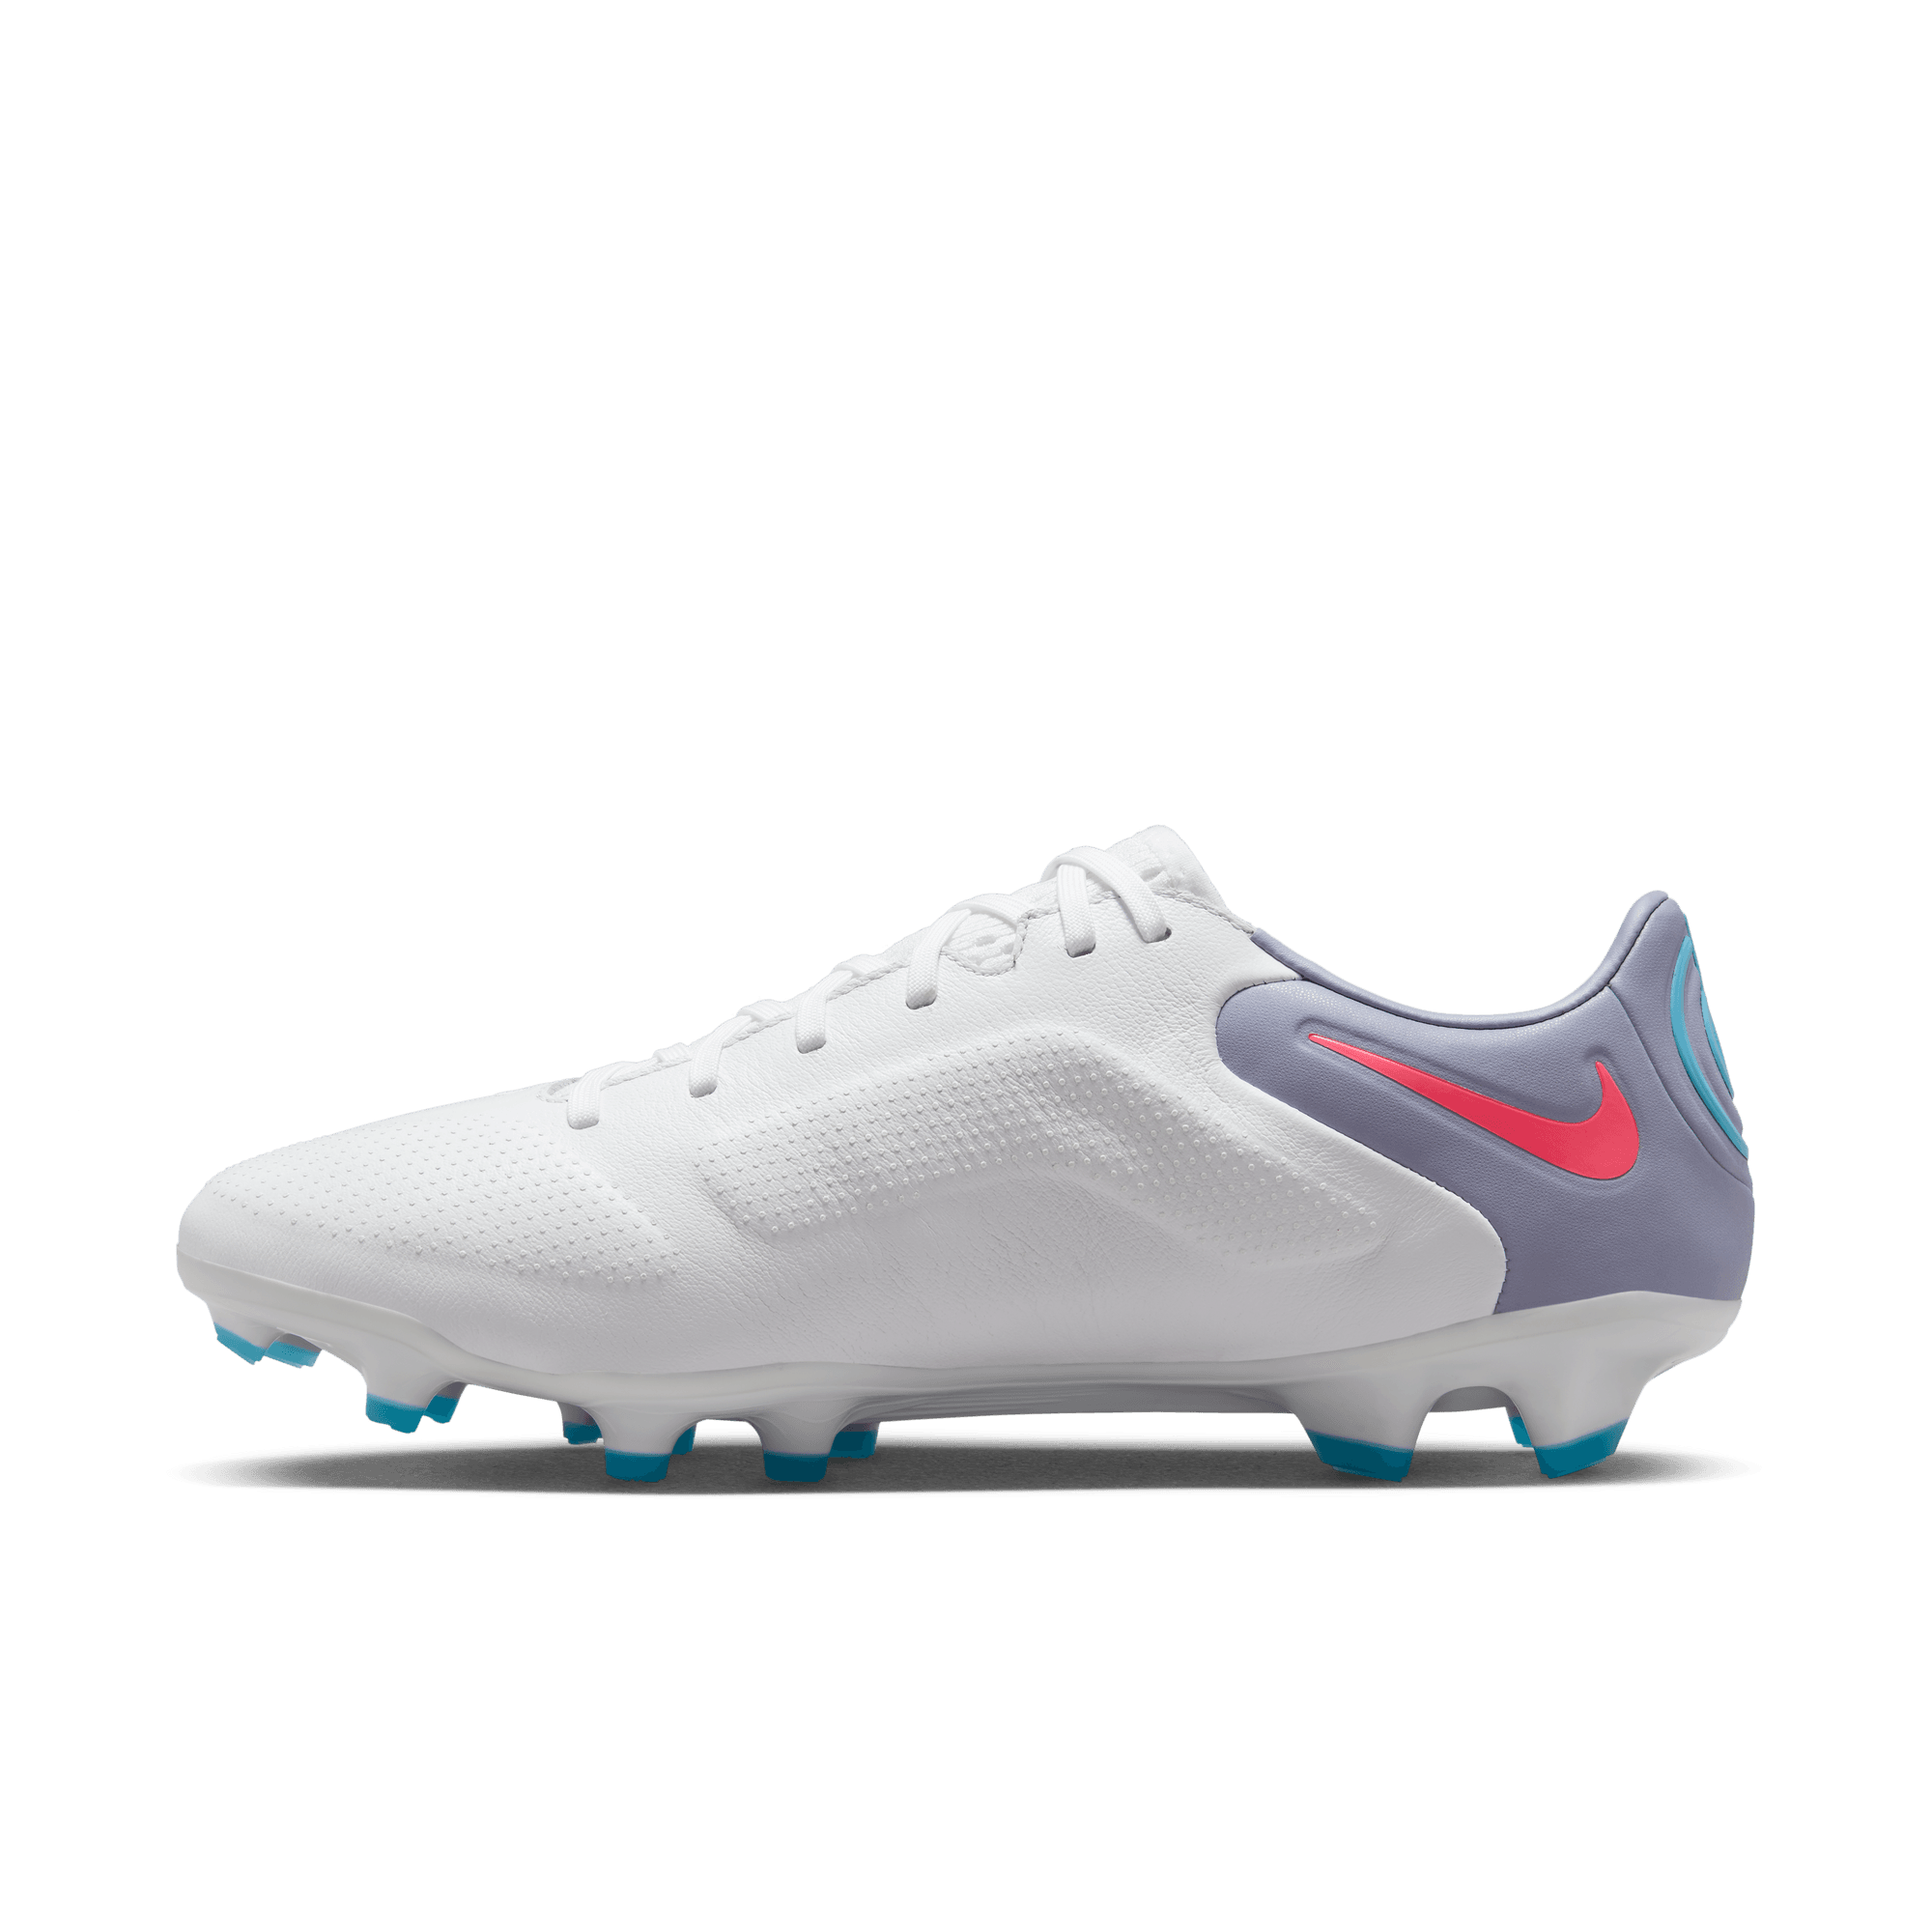 Nike Legend 9 Pro Football Boots | Kingsgrove